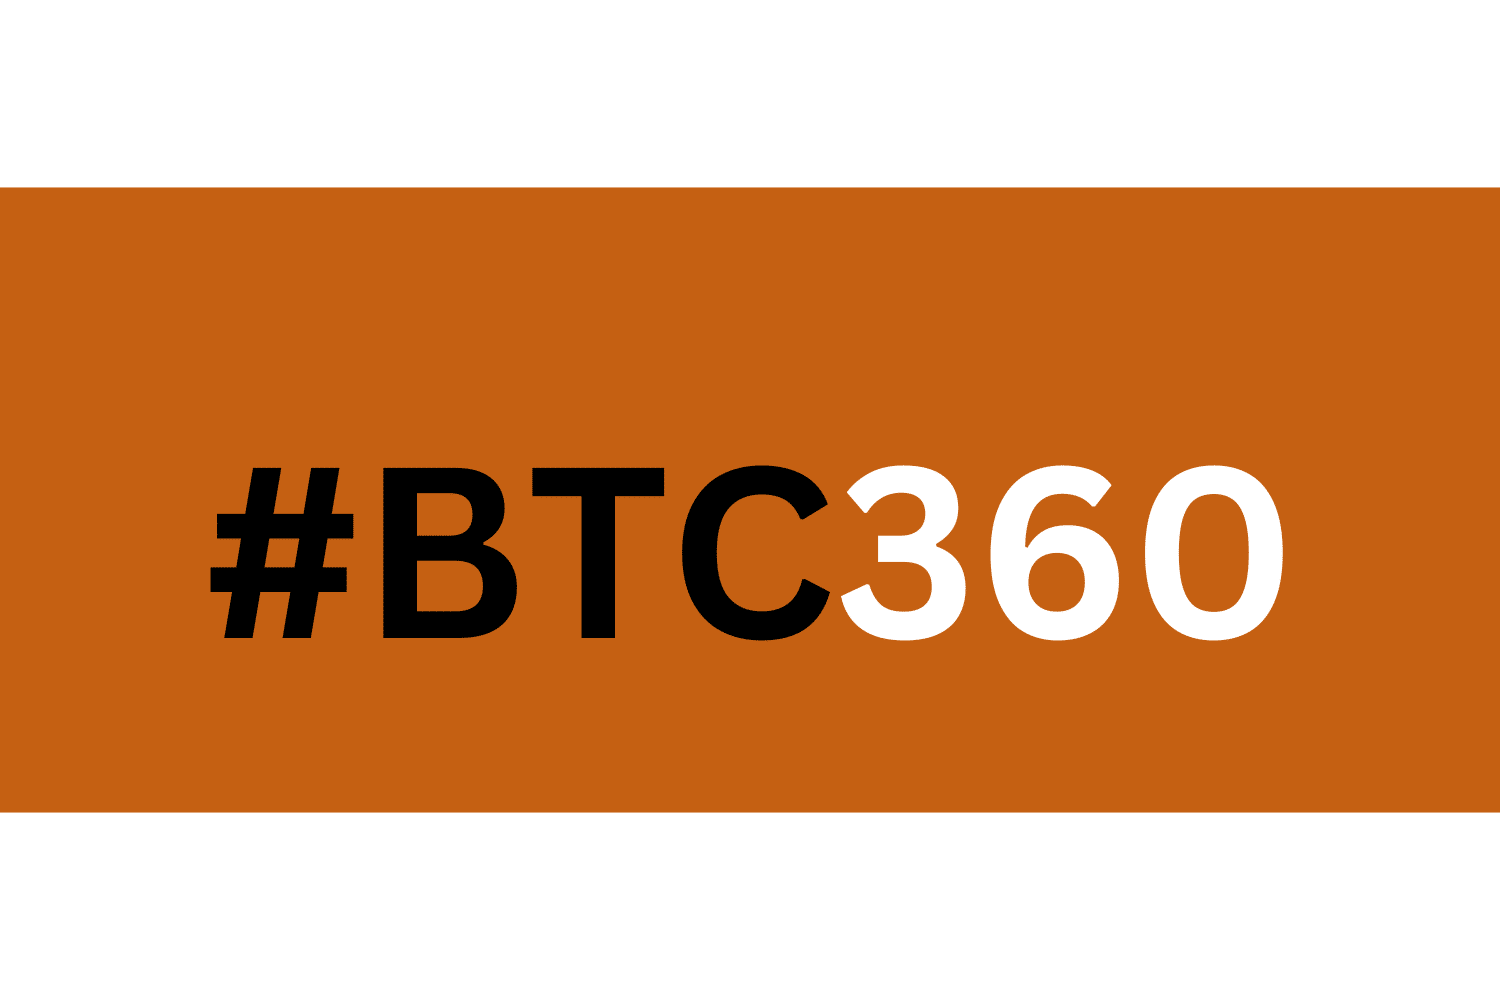 Bit 360 Signup